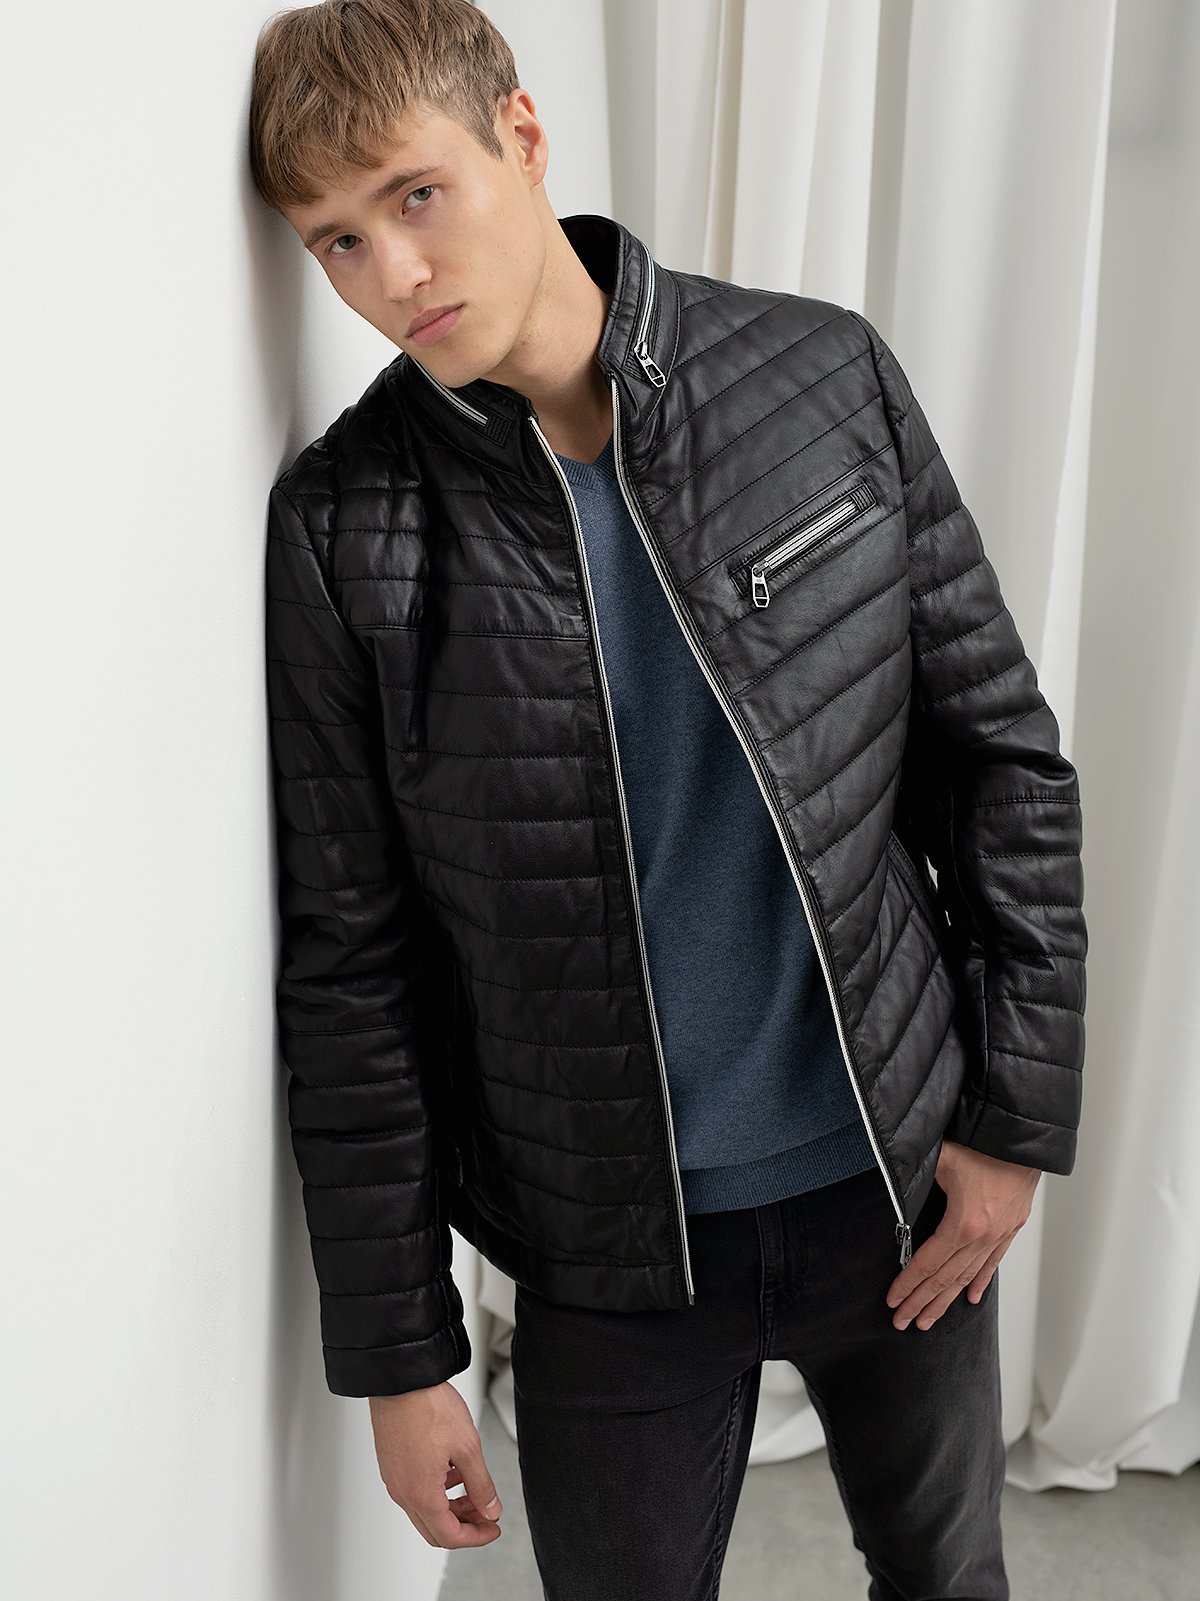 Milestone Men's Leather Jacket Black Genuine Leather Turn-Down Collar Size  48-60, black : Amazon.de: Fashion